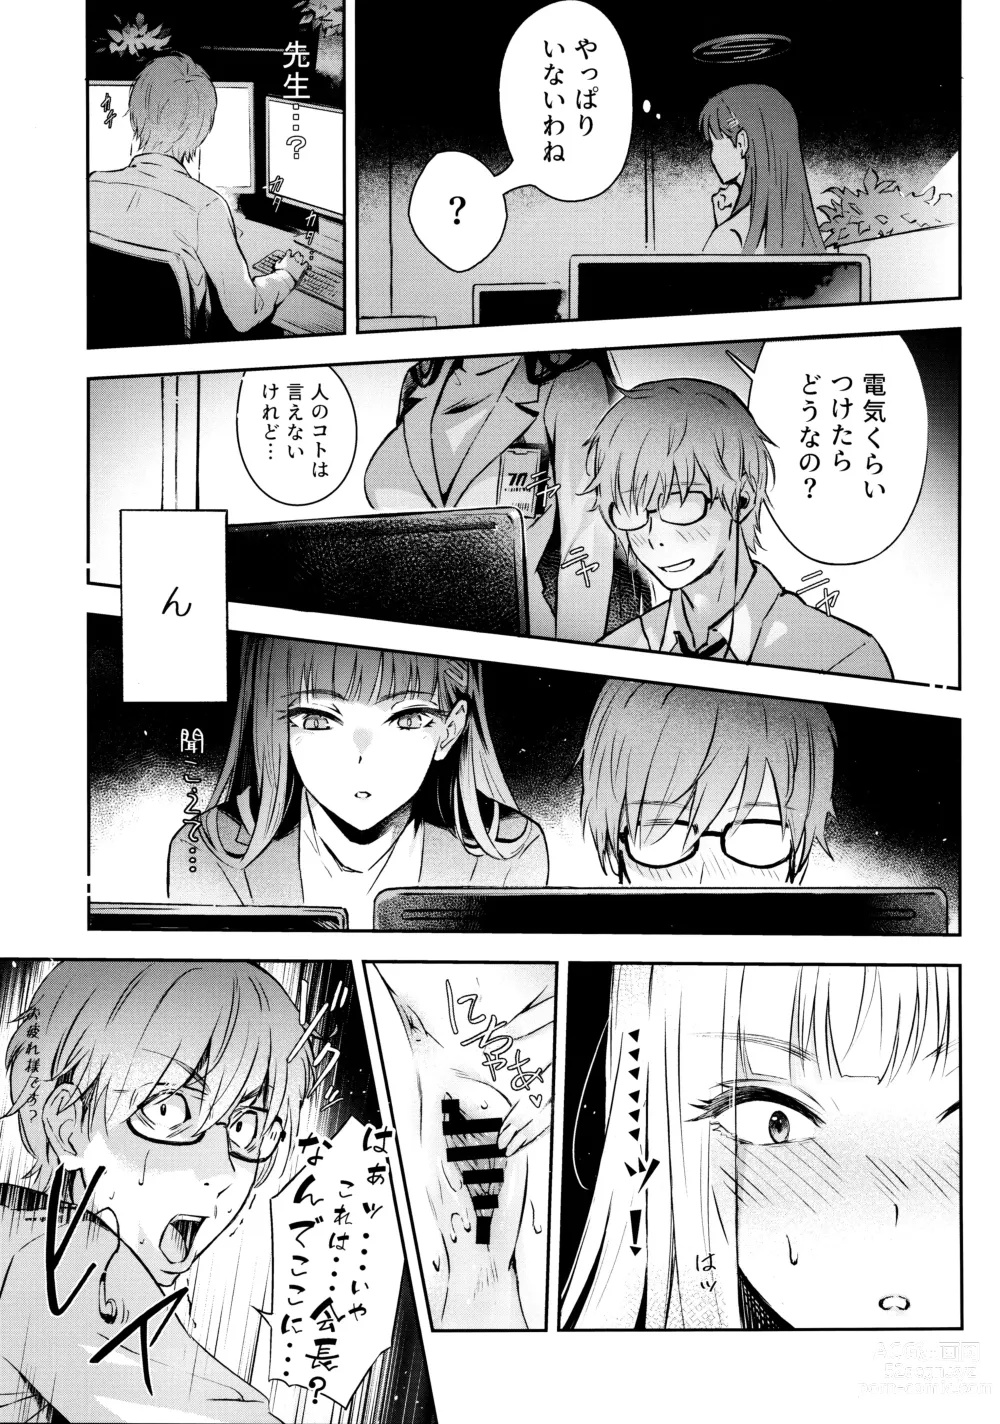 Page 6 of doujinshi Kaichou-chan no Koi - Student Government Presidents love